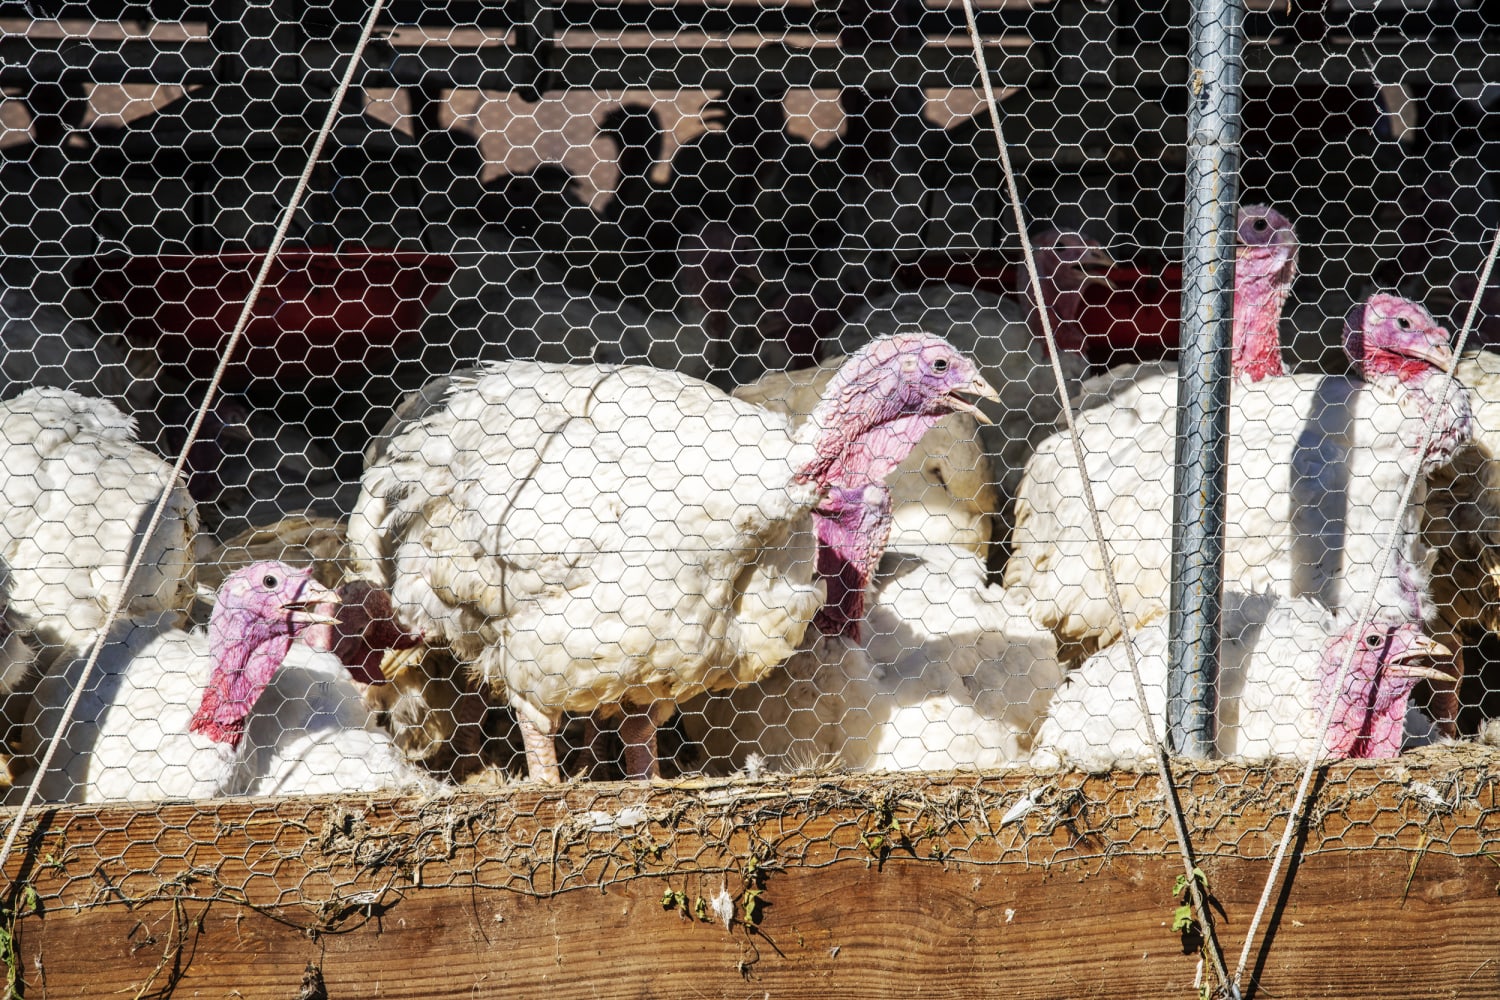 Bird flu spread in U.S. puts poultry farms on high alert